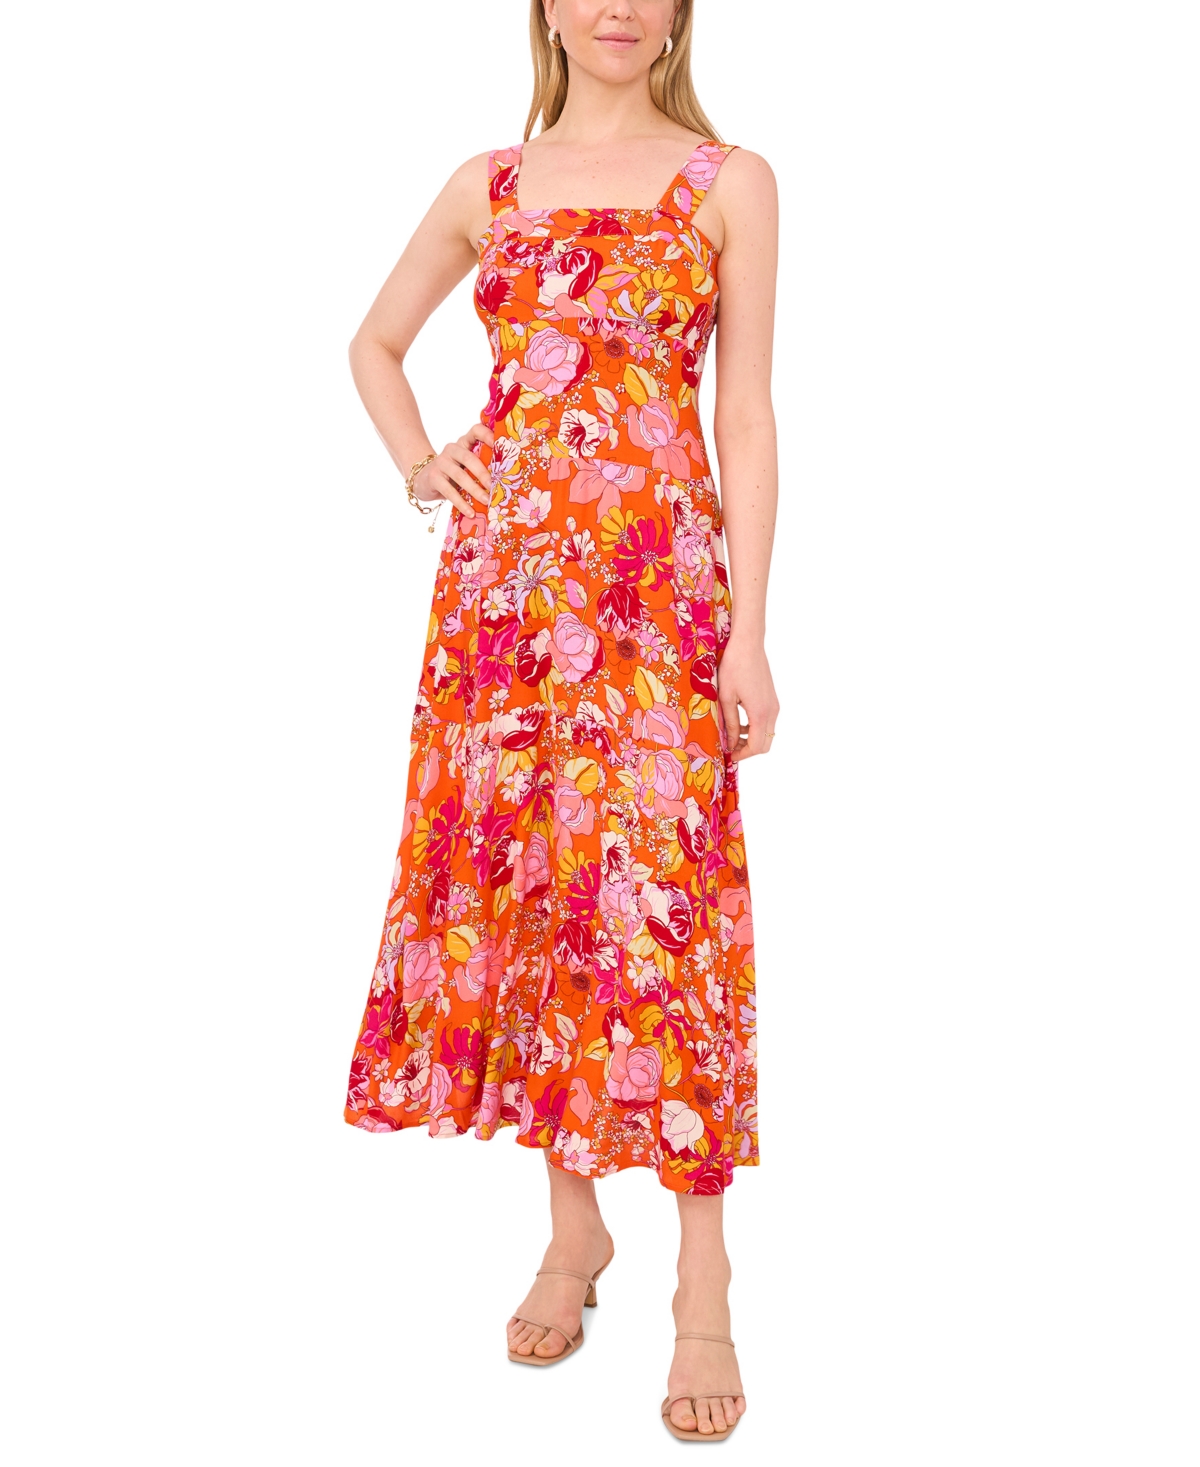 Petite Printed Square-Neck Sleeveless Dress - Orange Pink